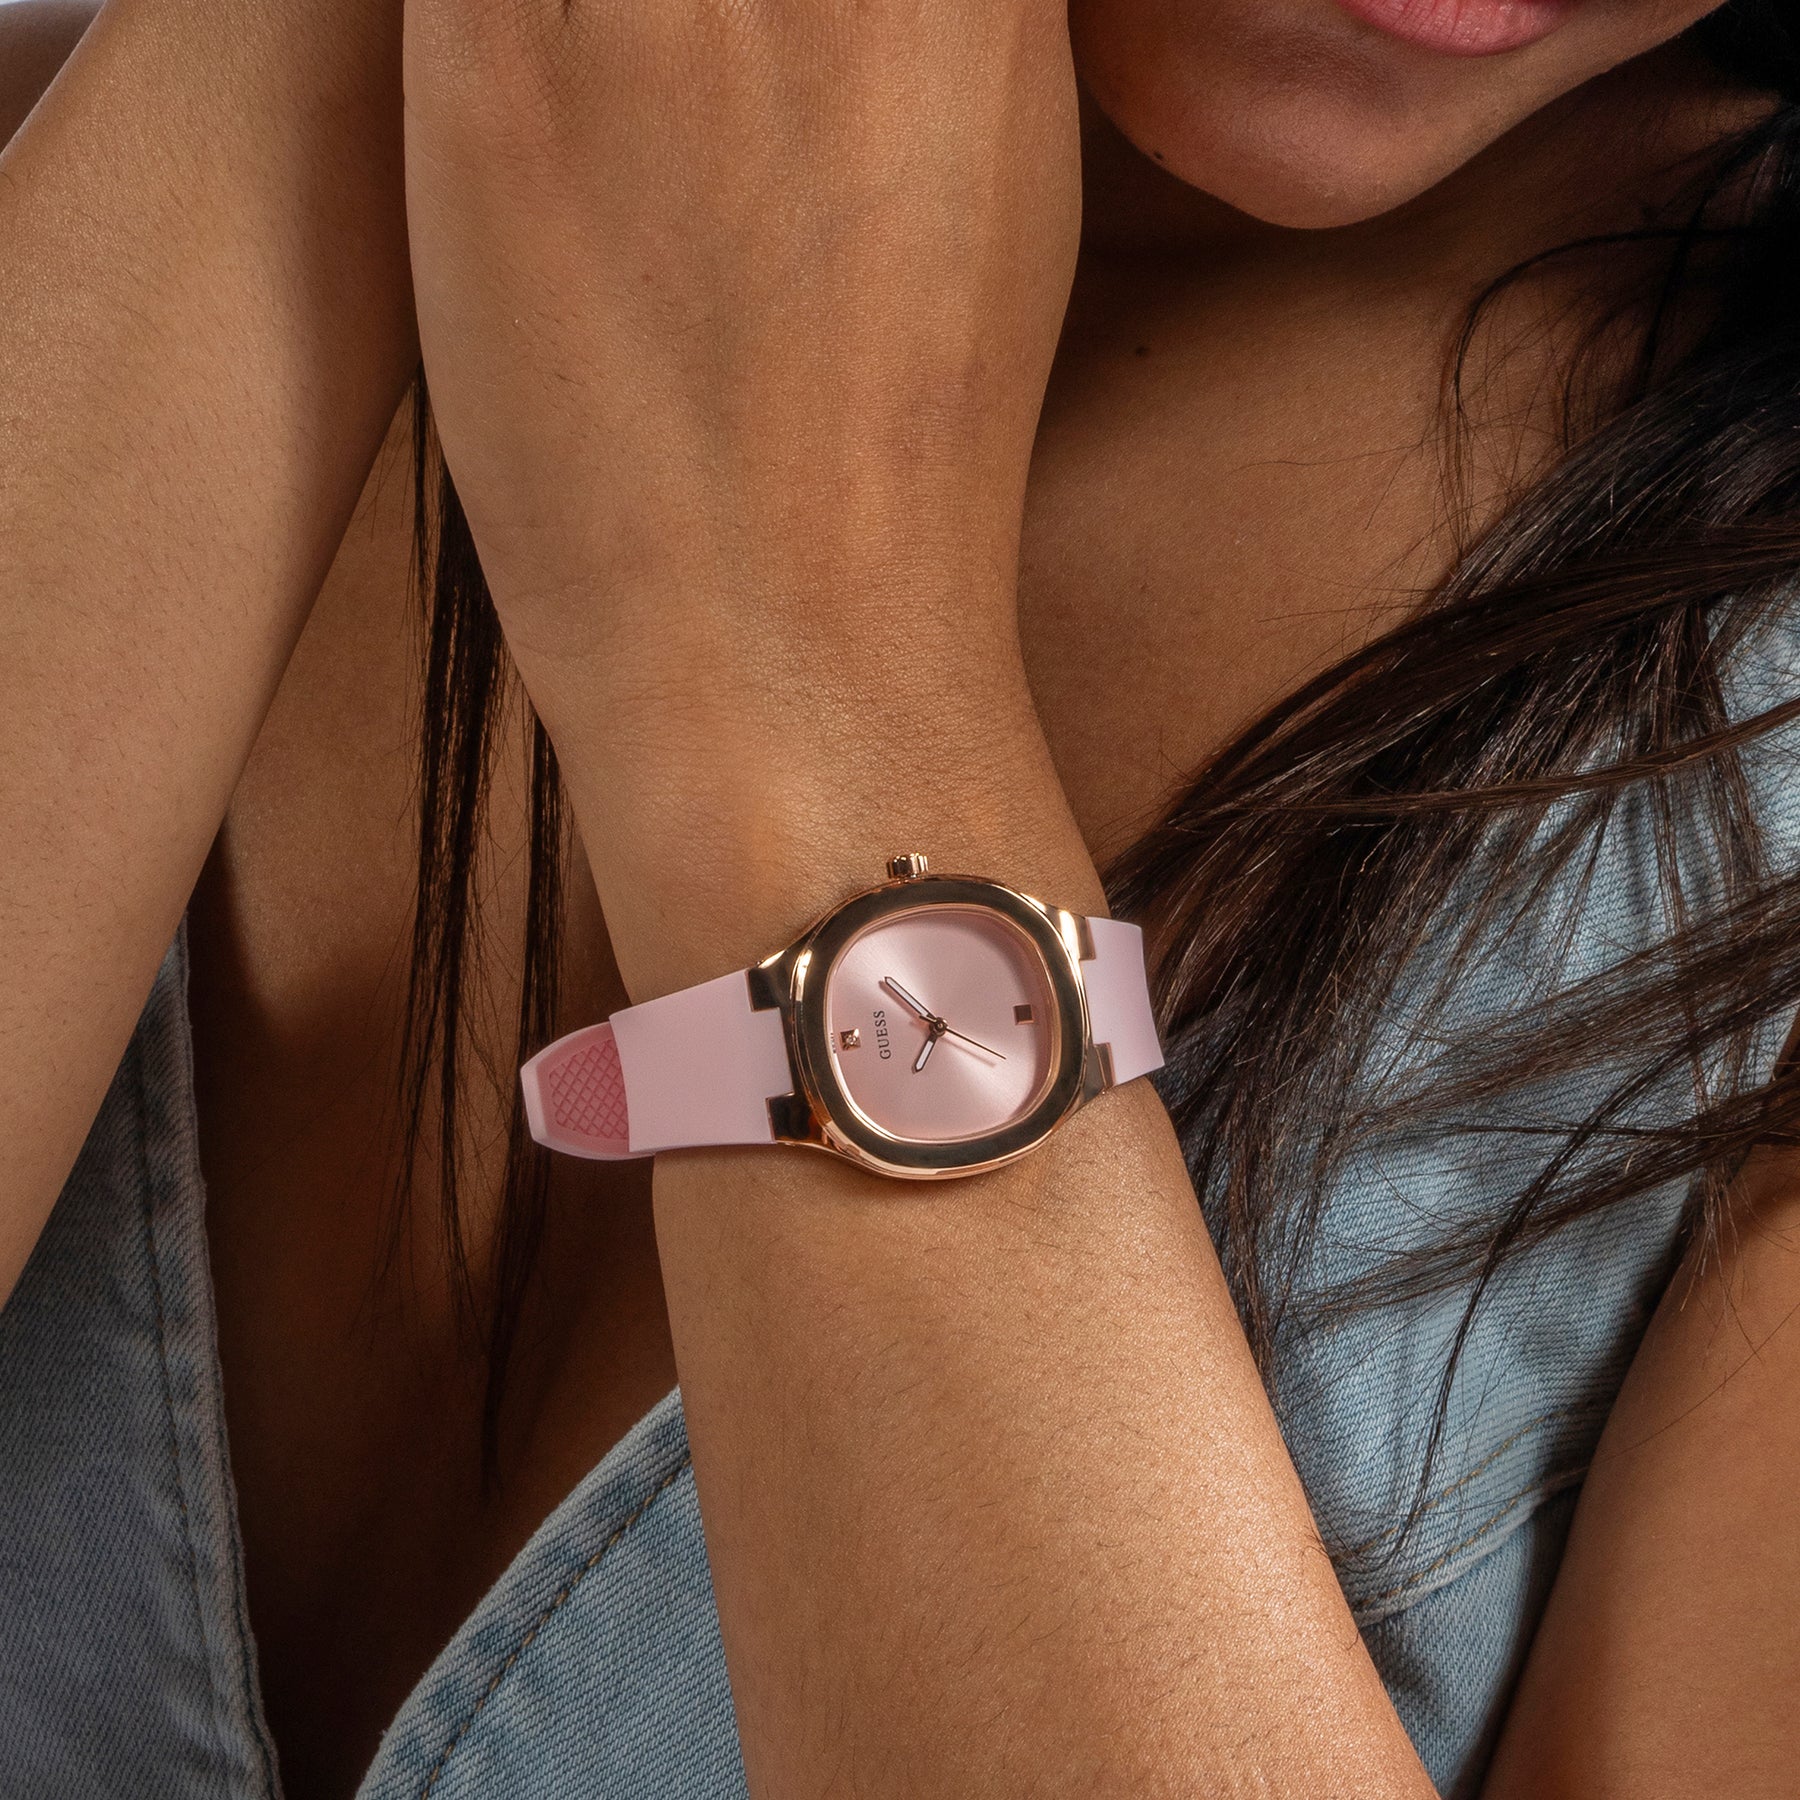 Guess Women's 32mm Pink Rose Gold Tone Quartz Watch GW0658L2